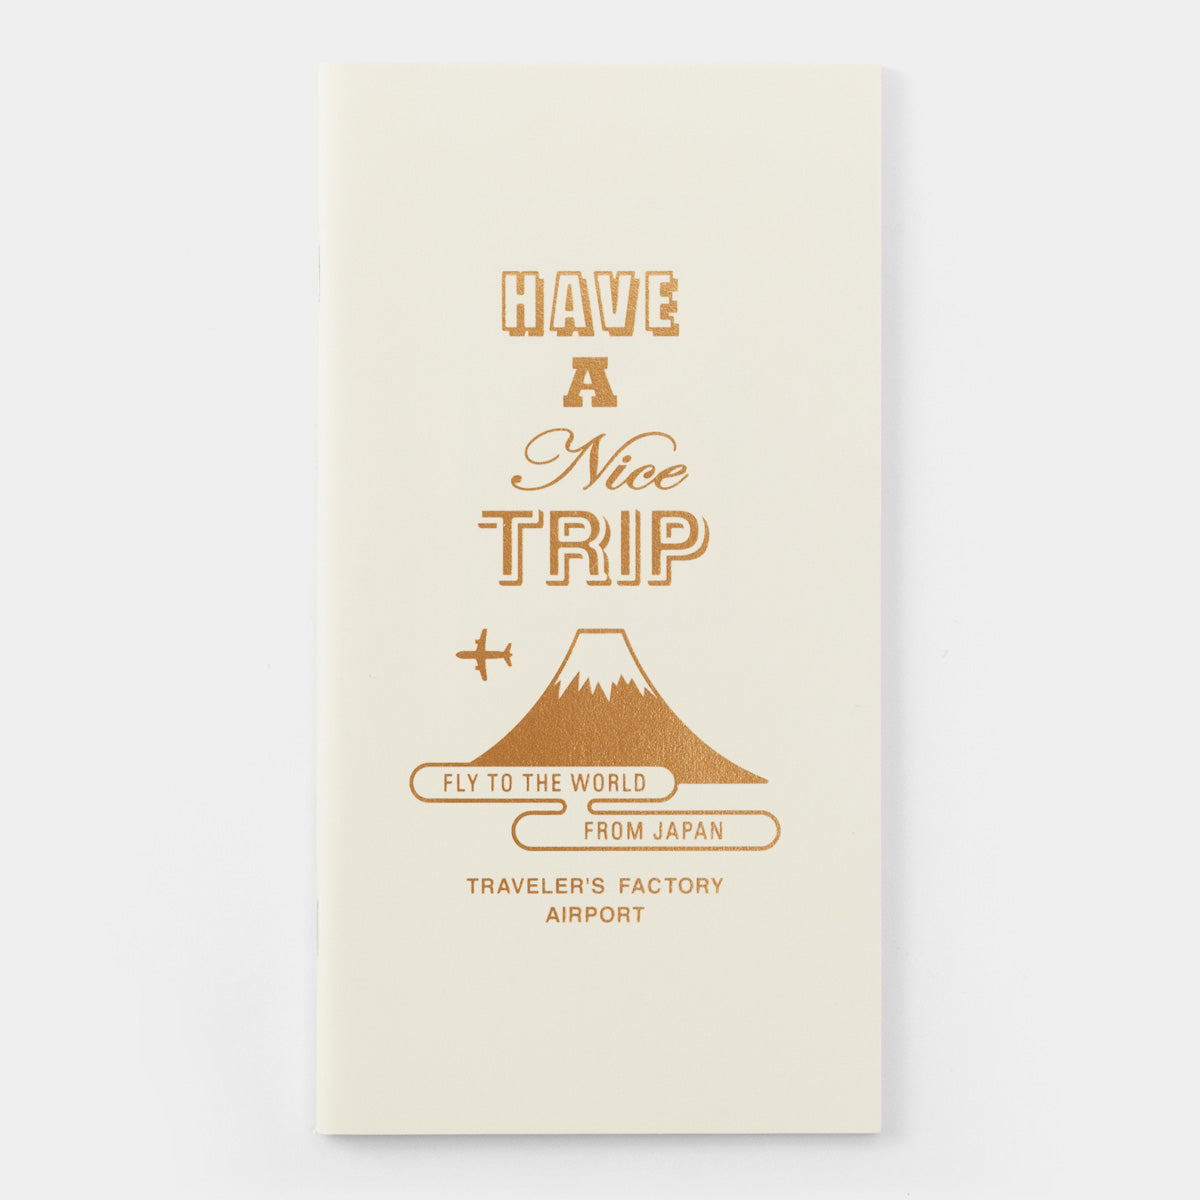 Traveler's Notebook Refill PRADA Yellow - tokopie